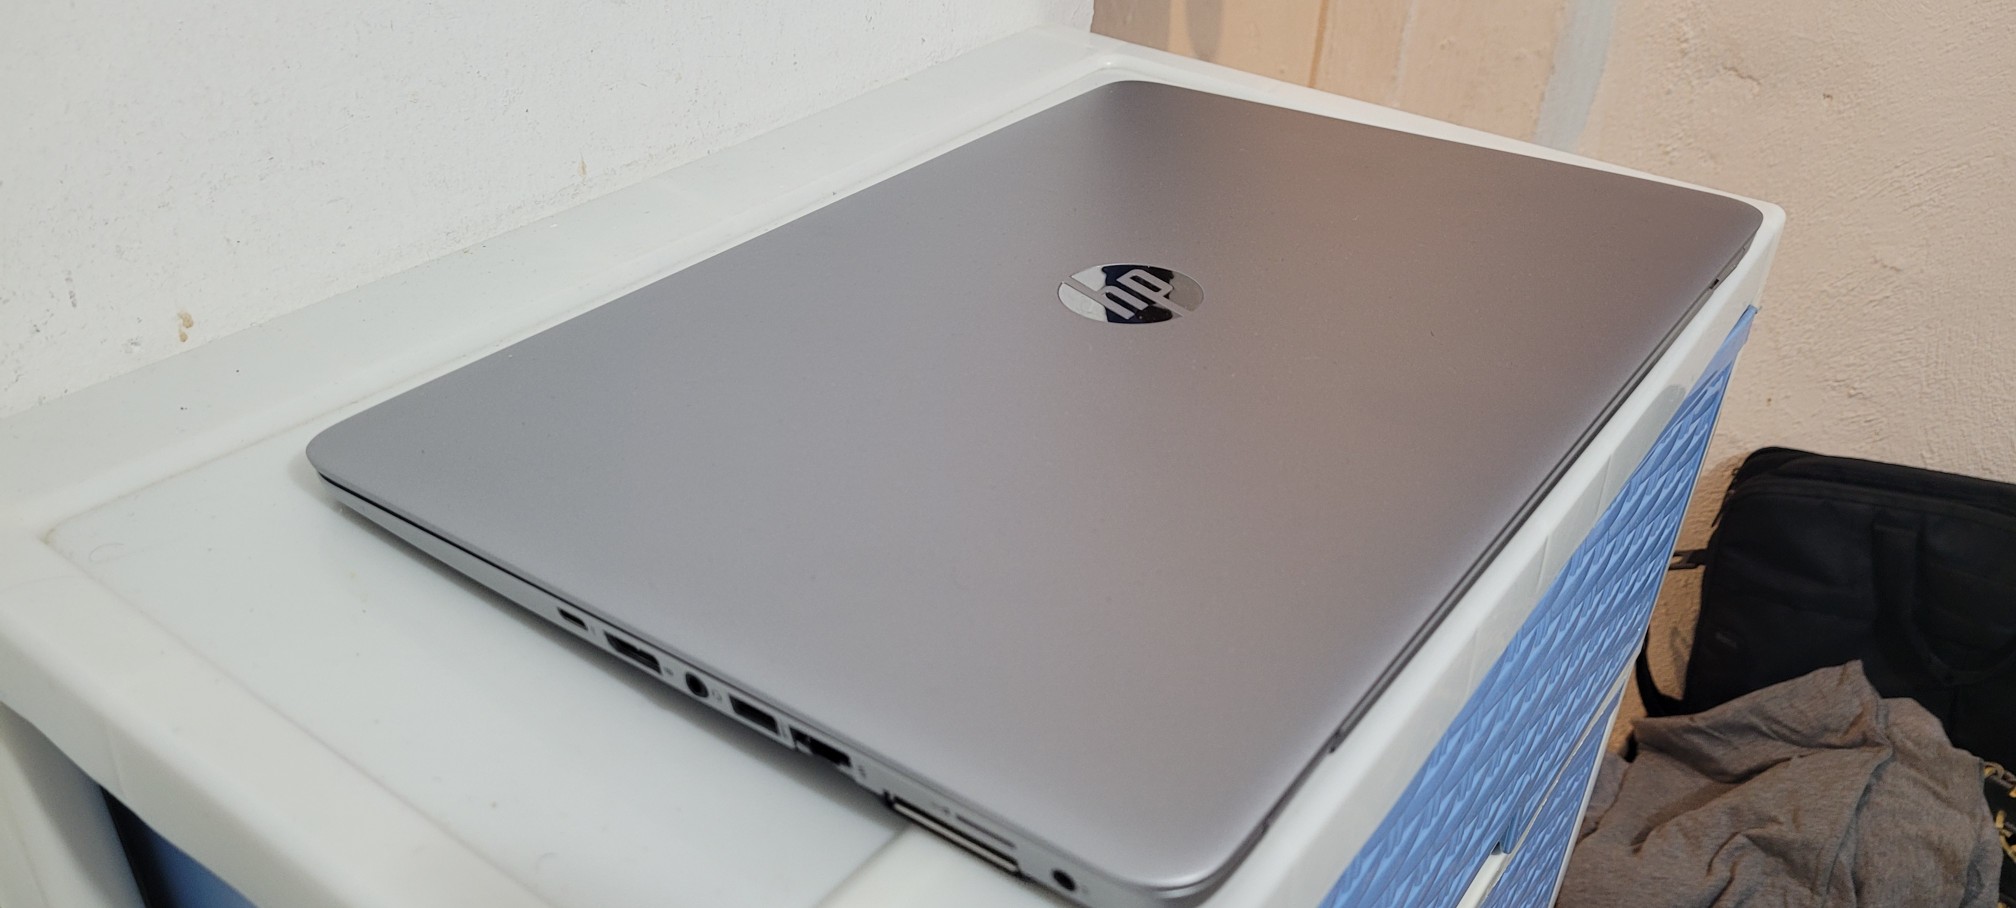 computadoras y laptops - Laptop Hp 14 Pulg Core i5 6ta Ram 8gb ddr4 Disco 500gb Full hdmi 2